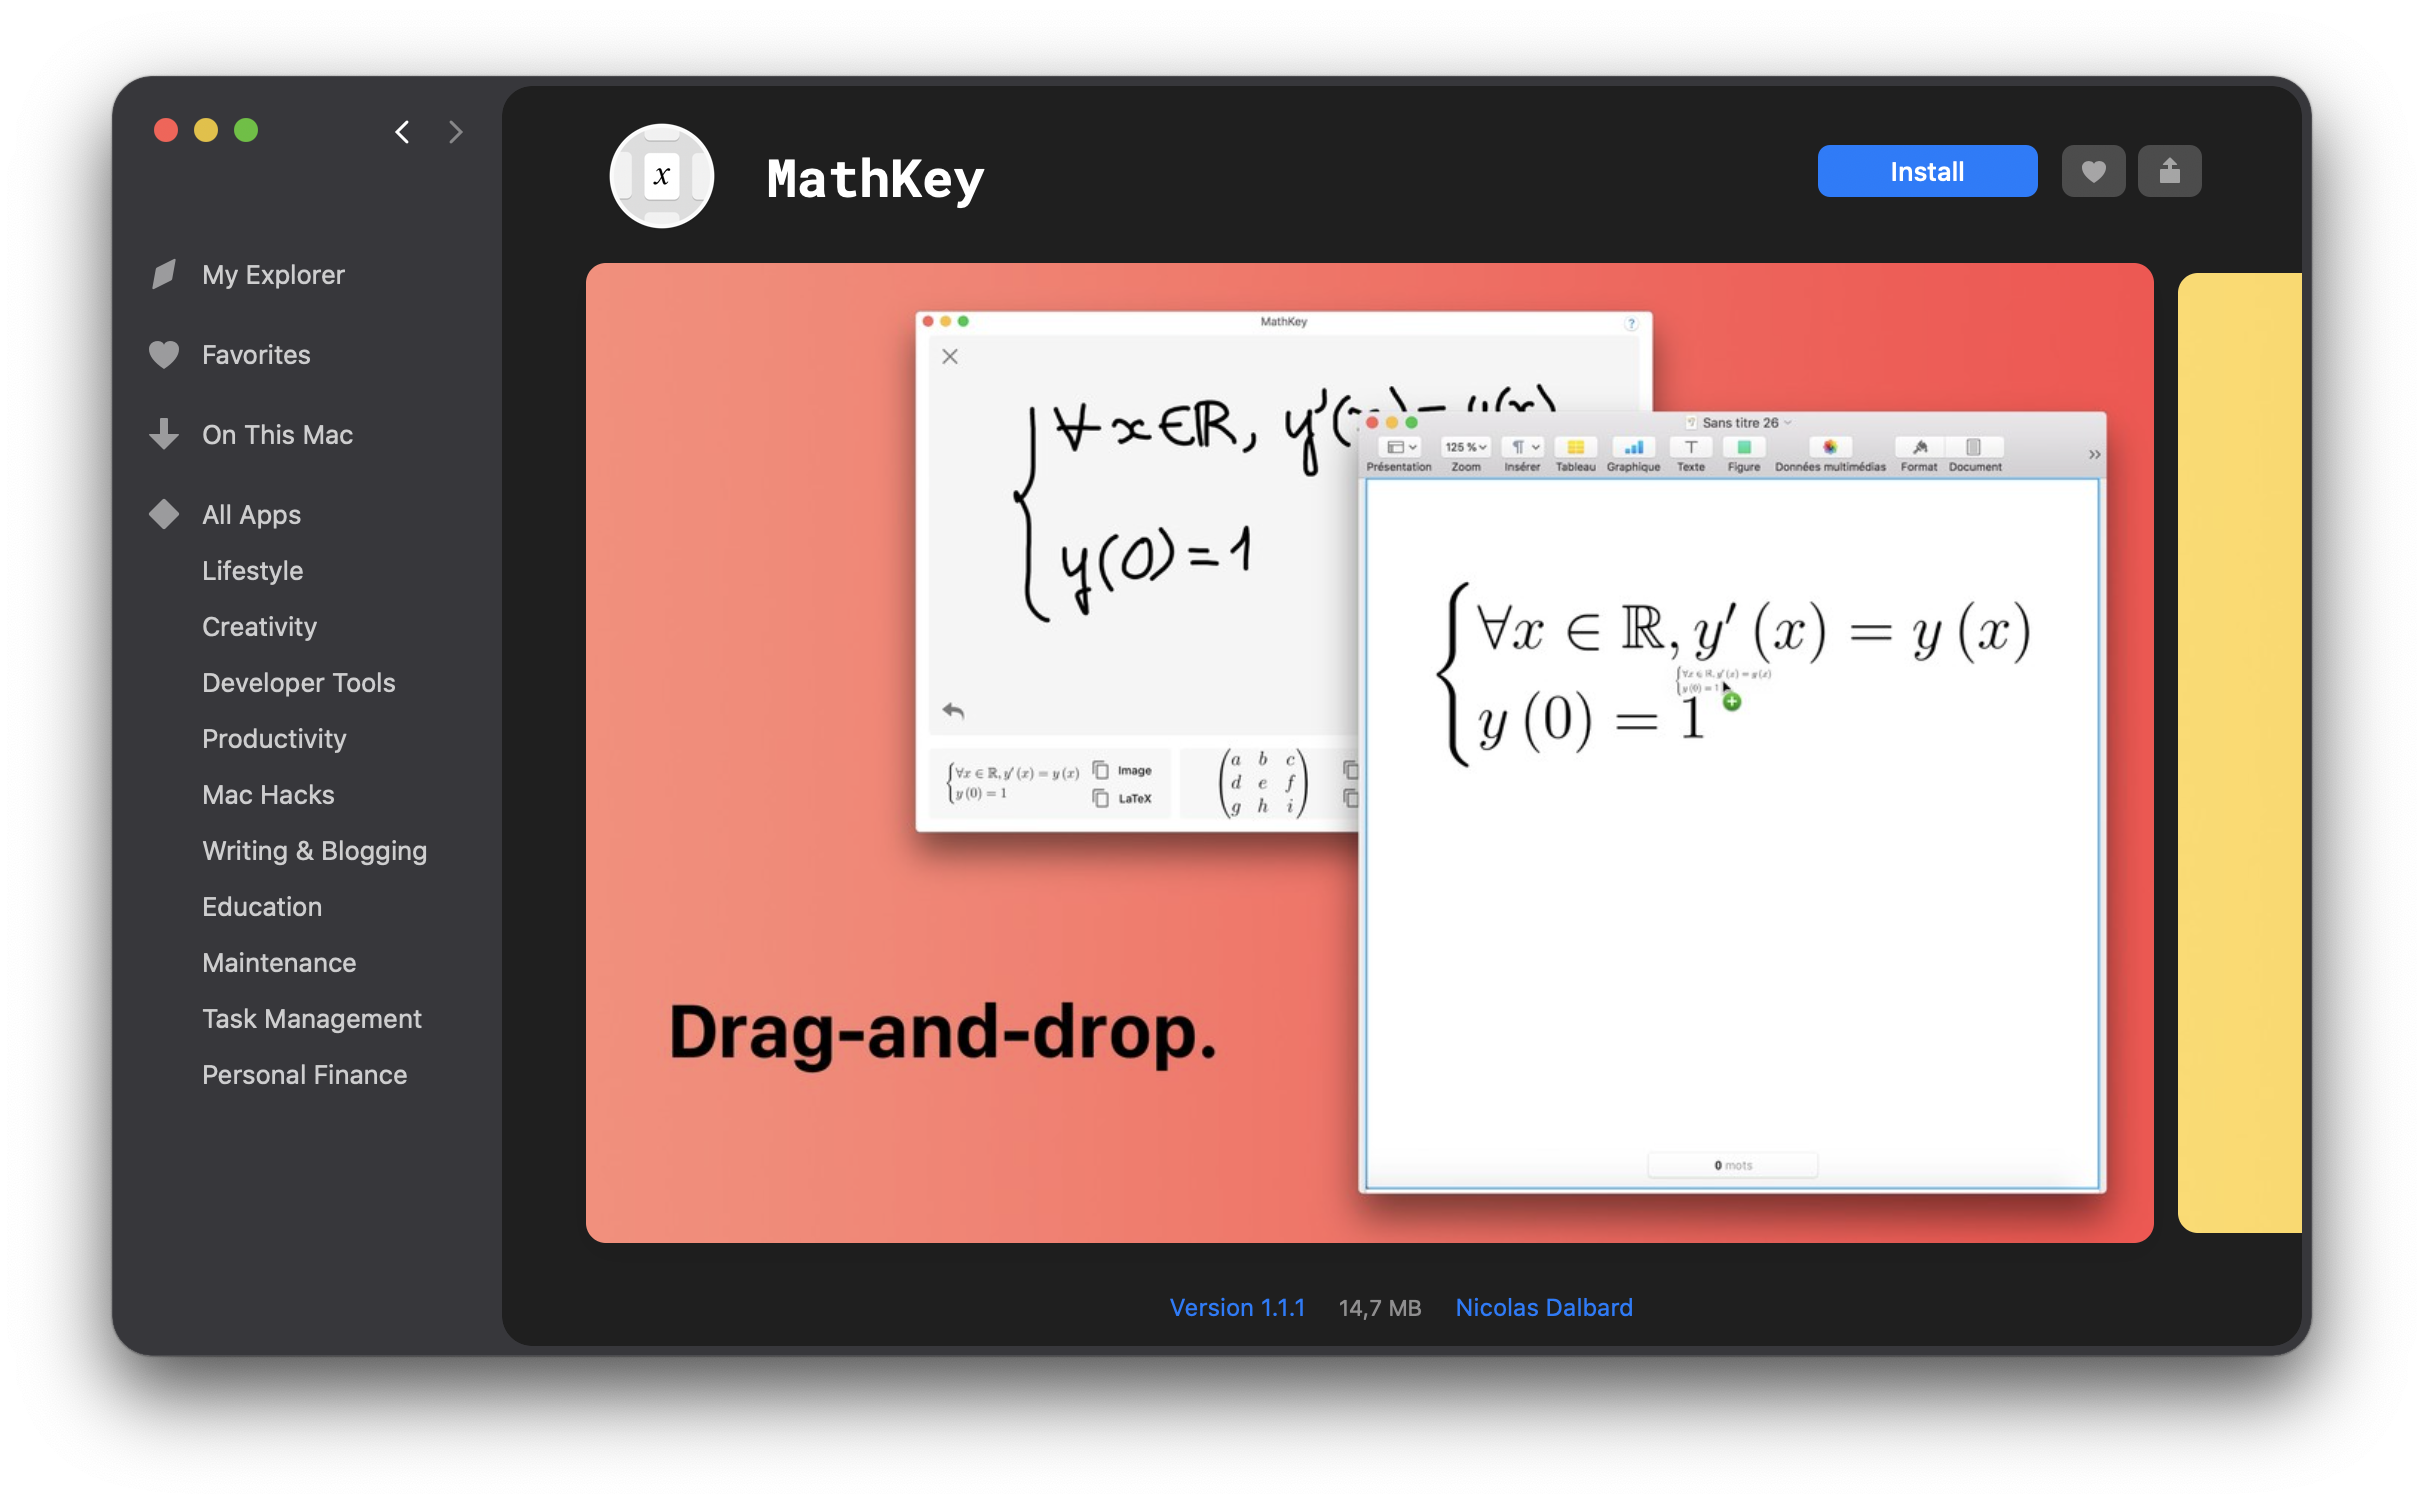 MathKey handwriting recognizer